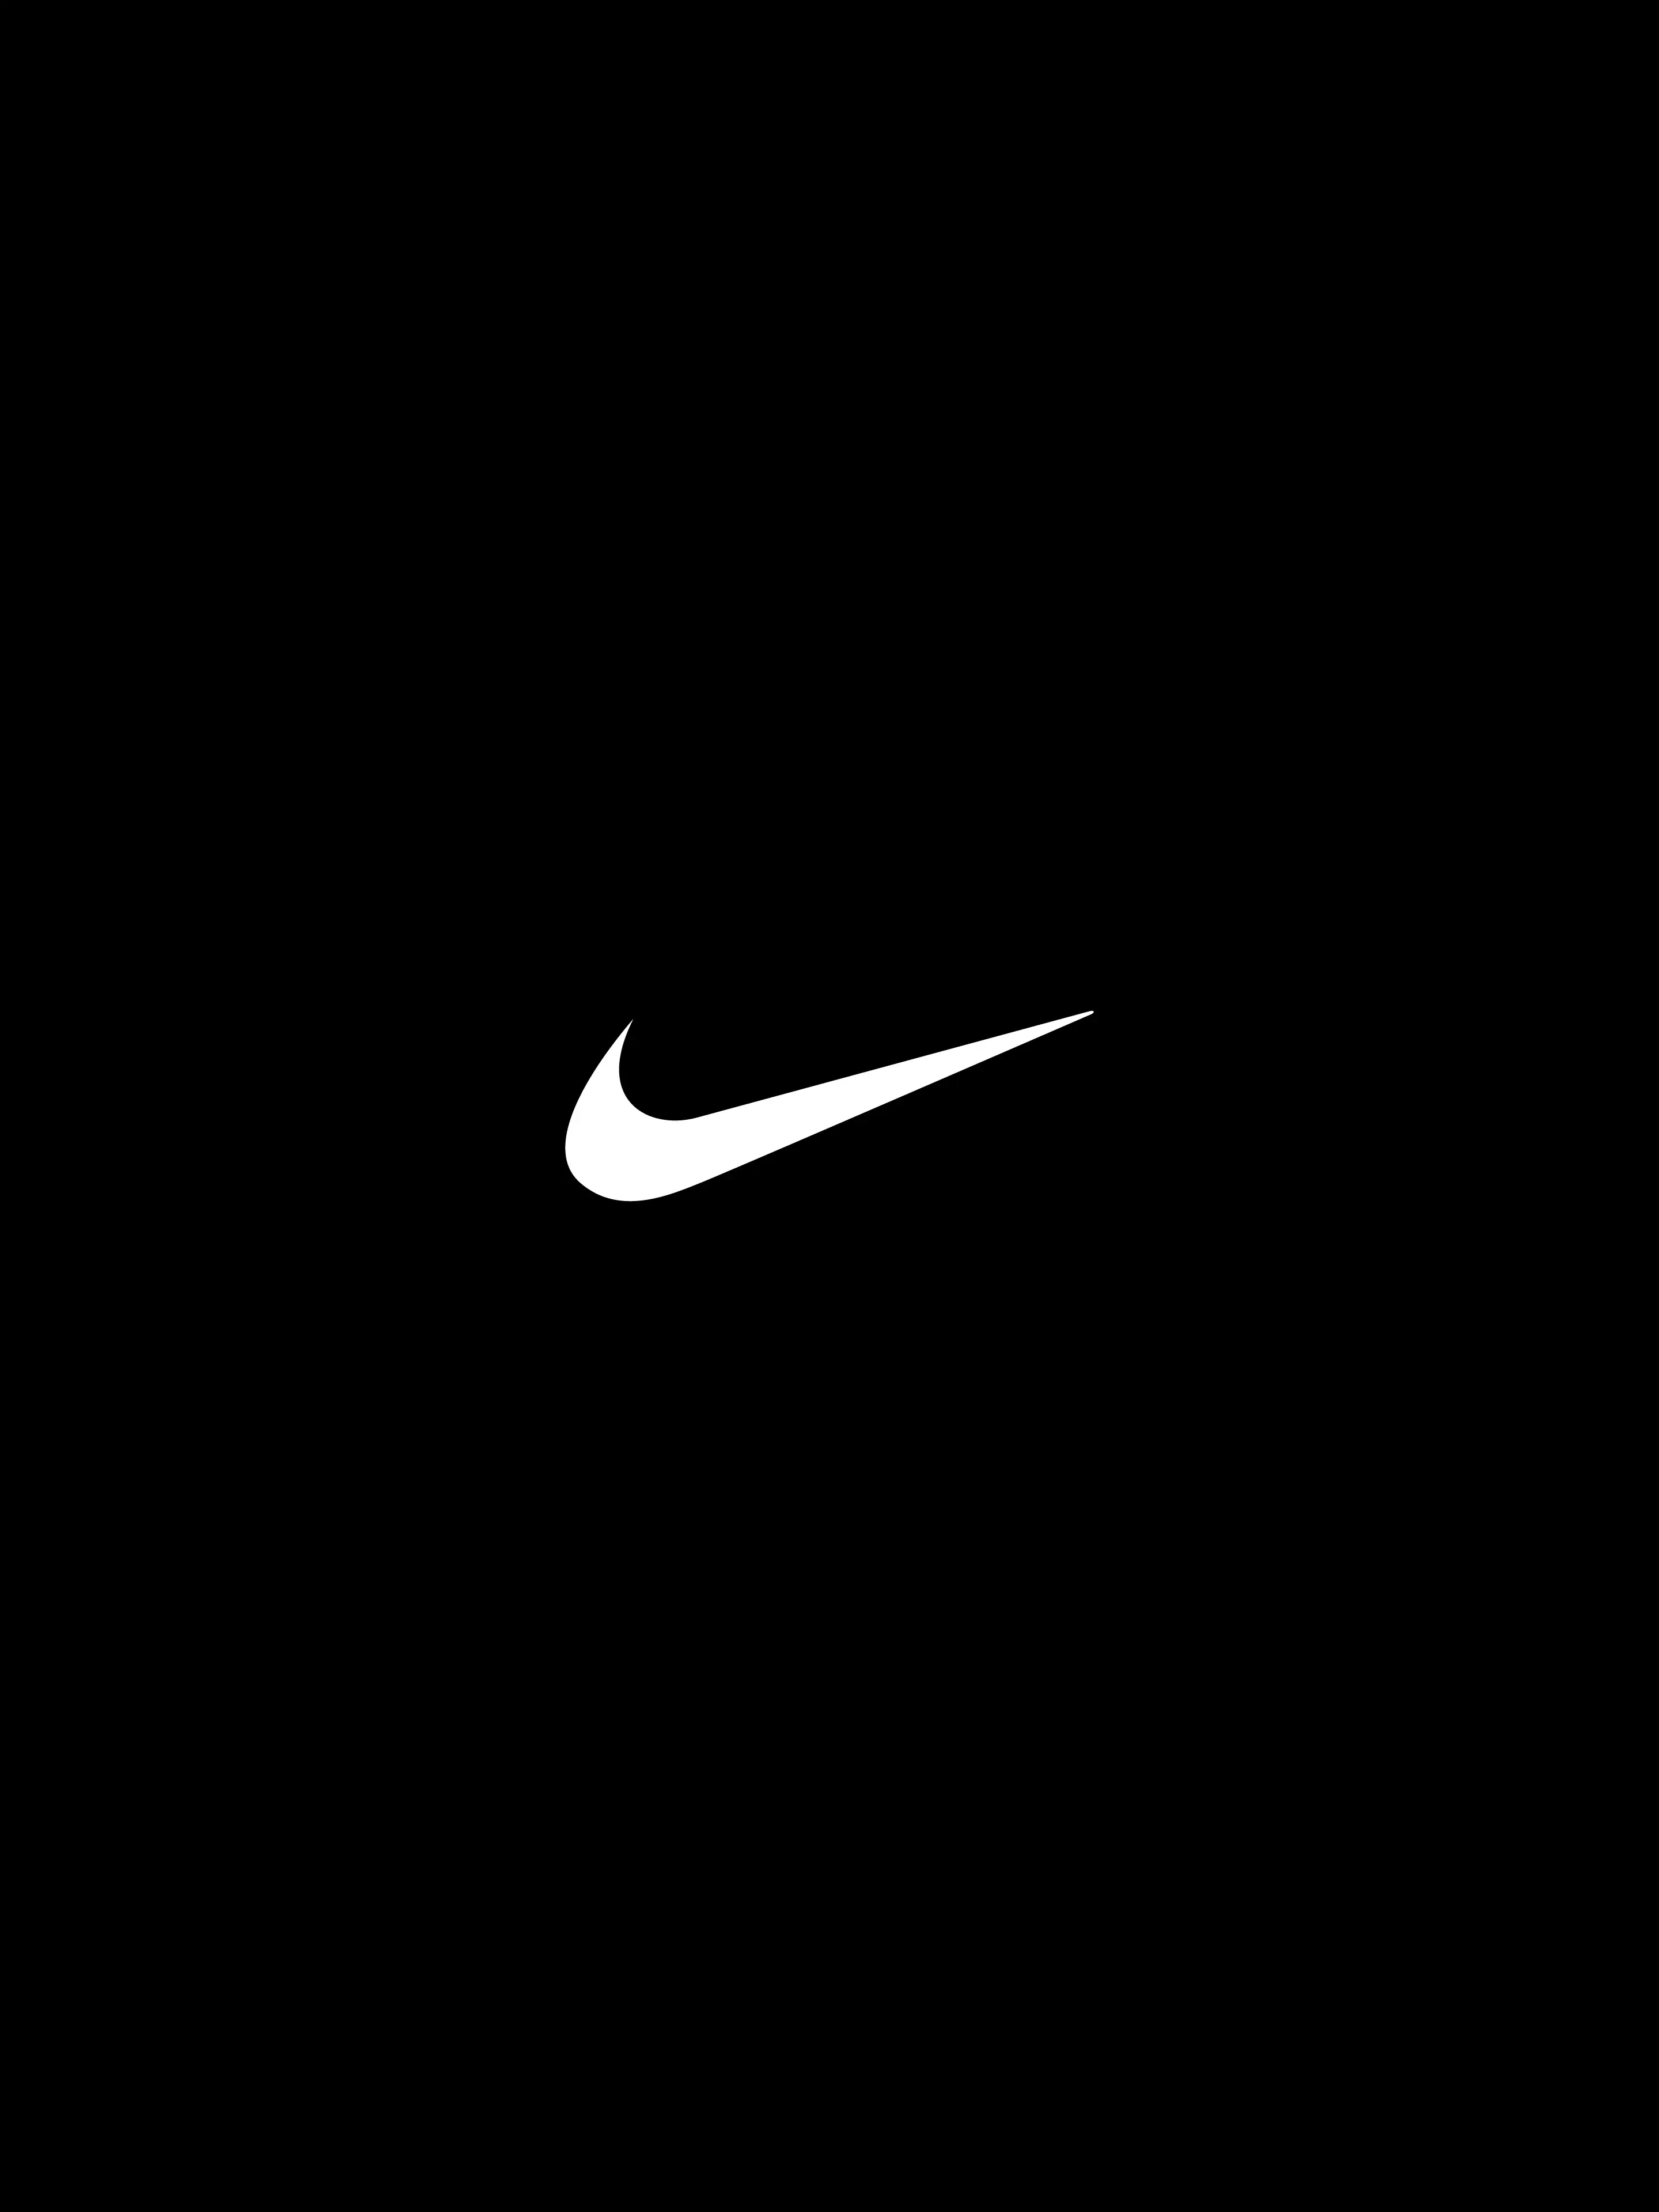  Nike Hintergrundbild 2880x3840. Nike Logo Hintergrundbild